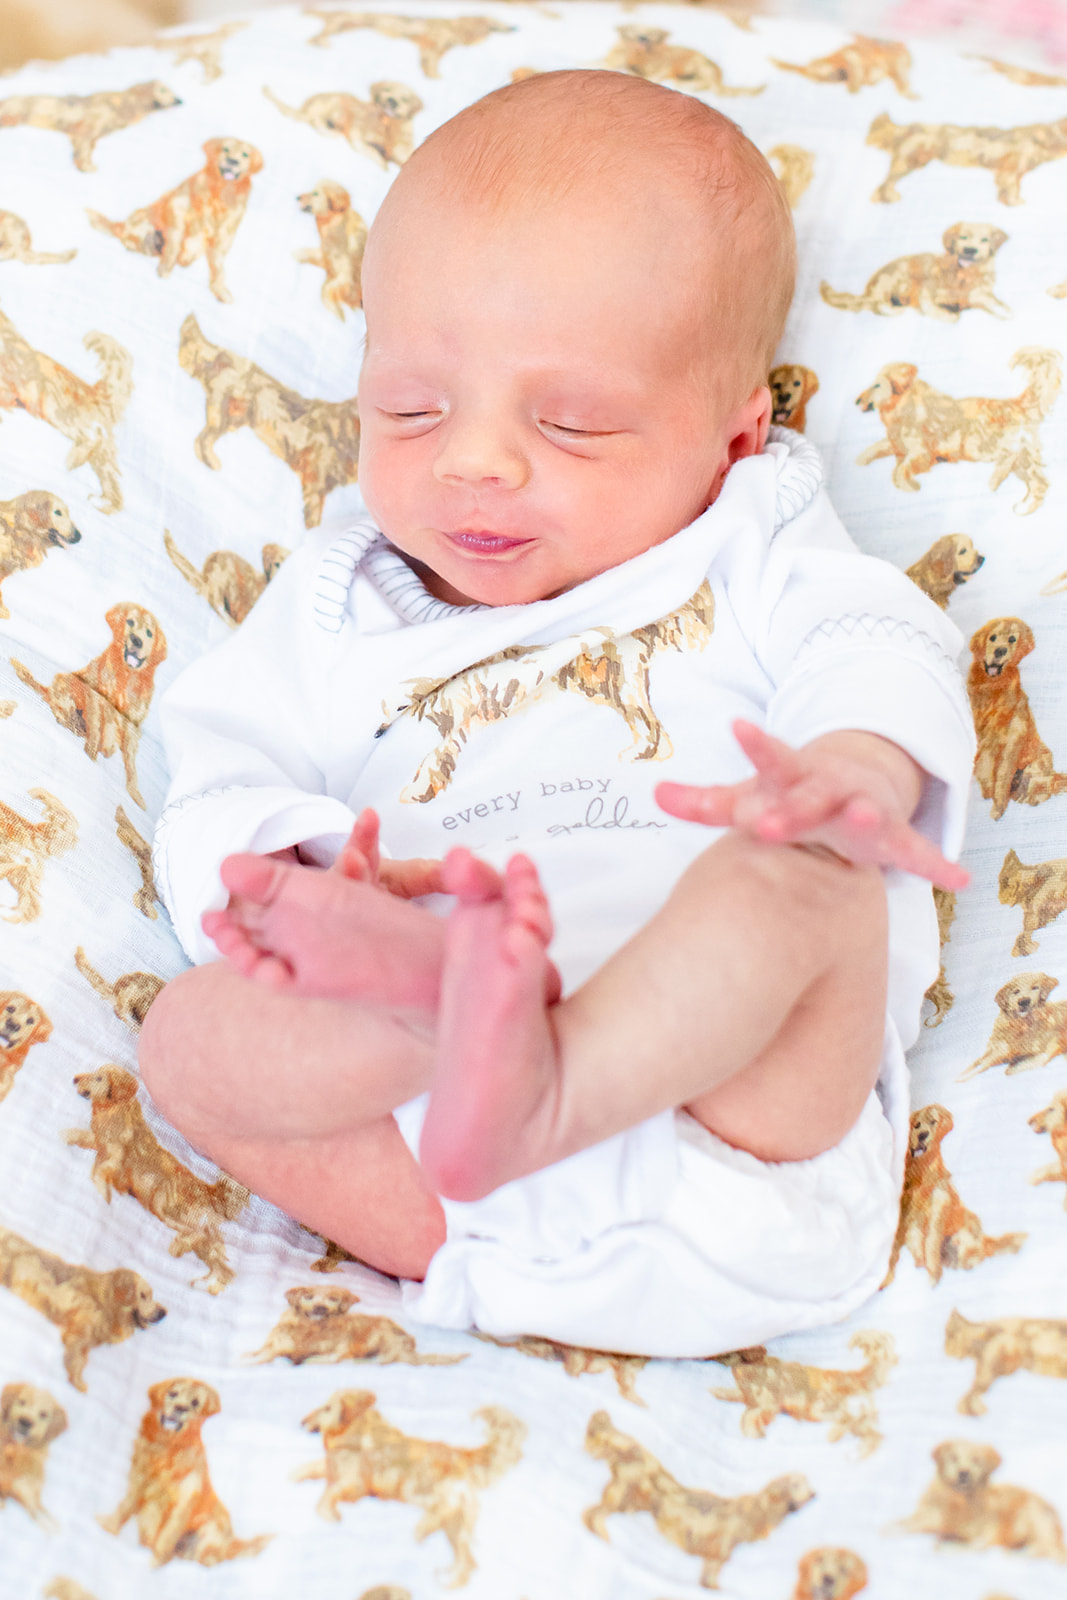 Baby Kackys Lifestyle Newborn Shoot with her Golden Retriever - Image Property of www.j-dphoto.com